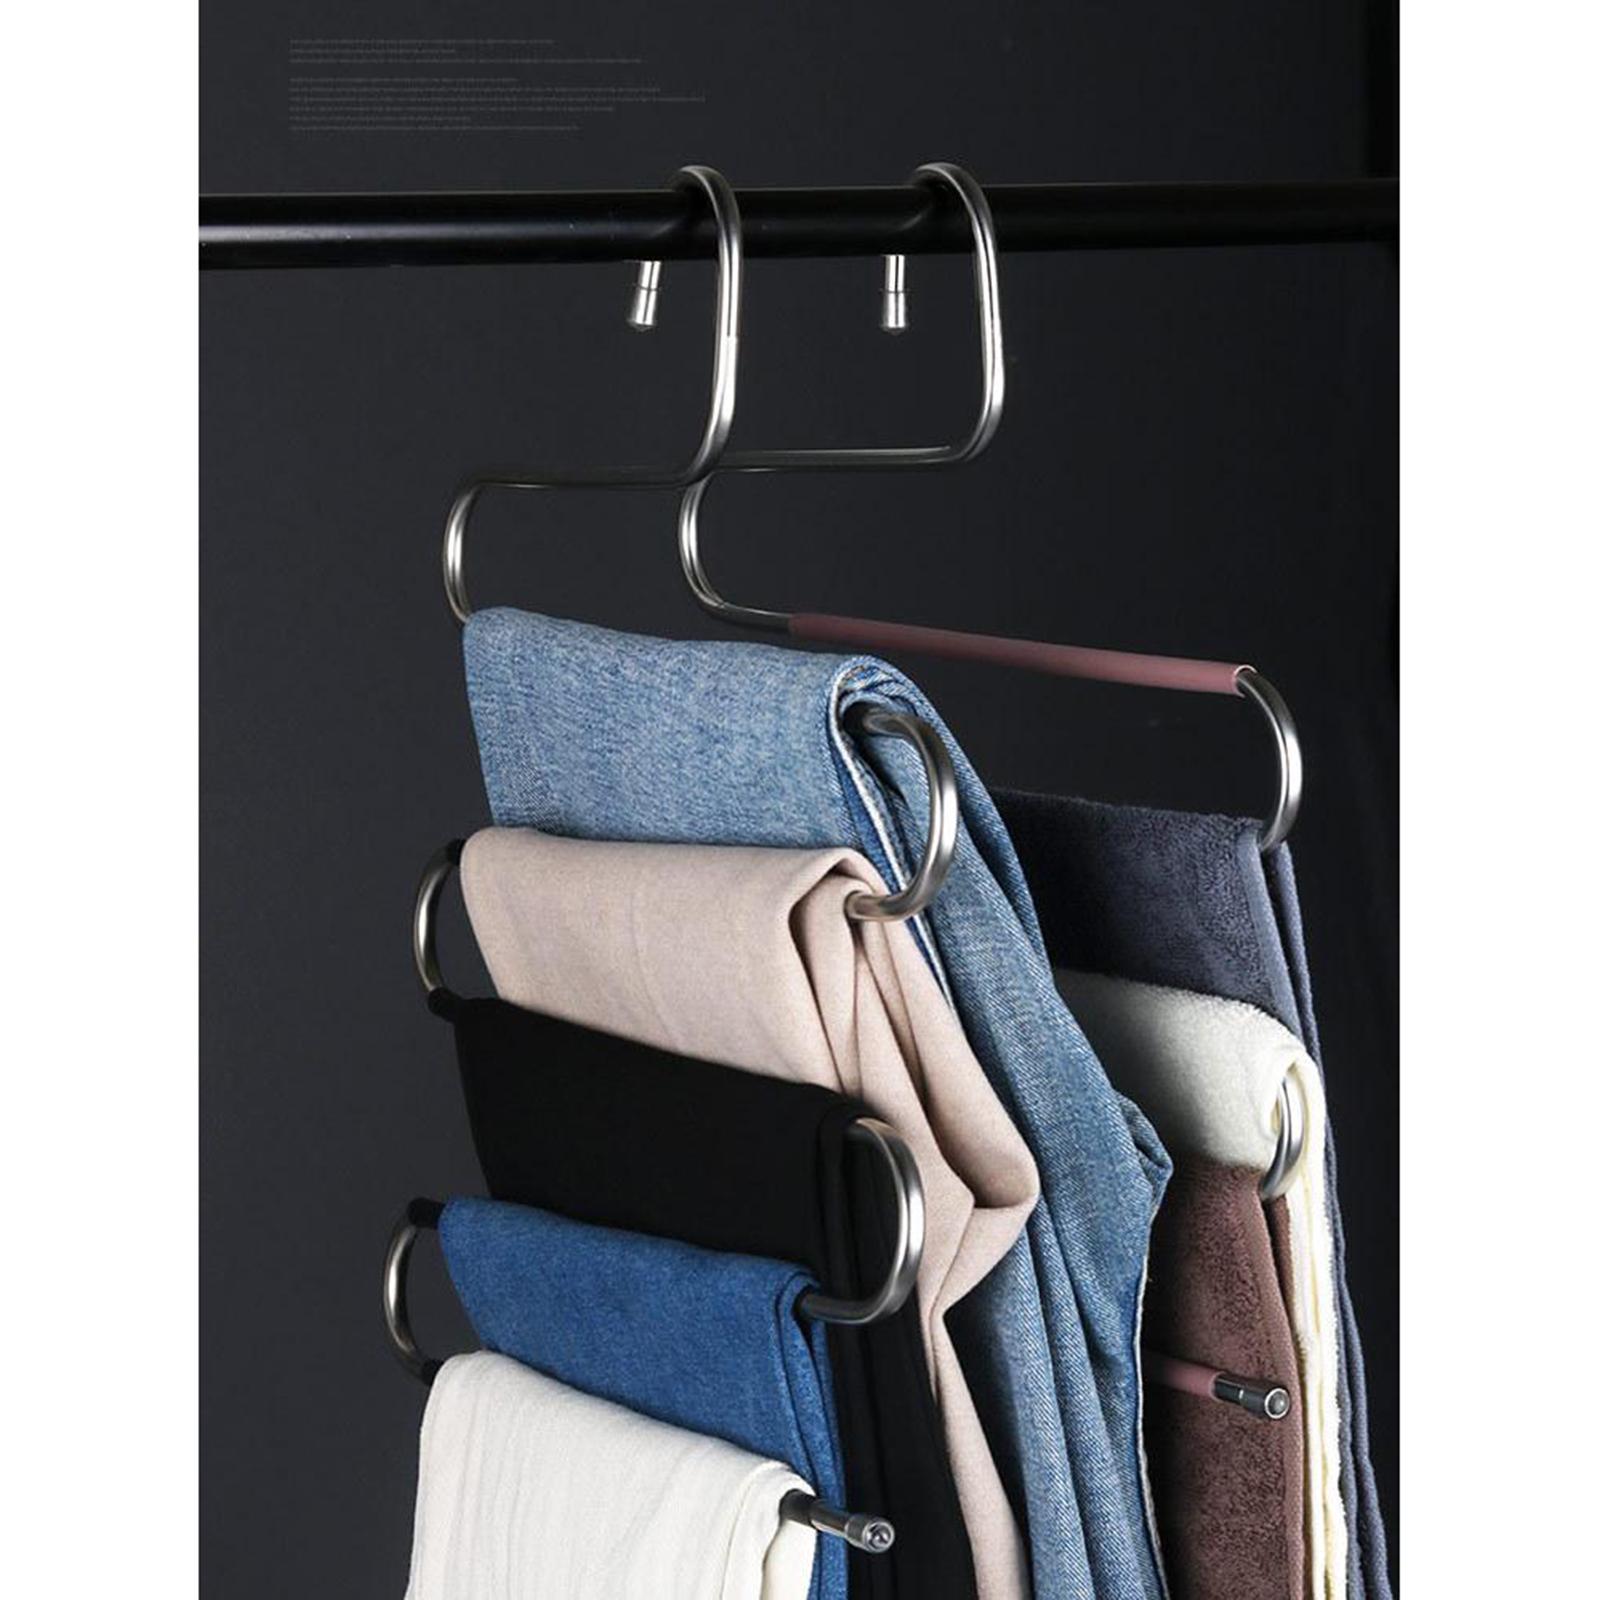 Pants Clothes Storage Rack Pants Tie Storage Shelf Closet Organizer Silver